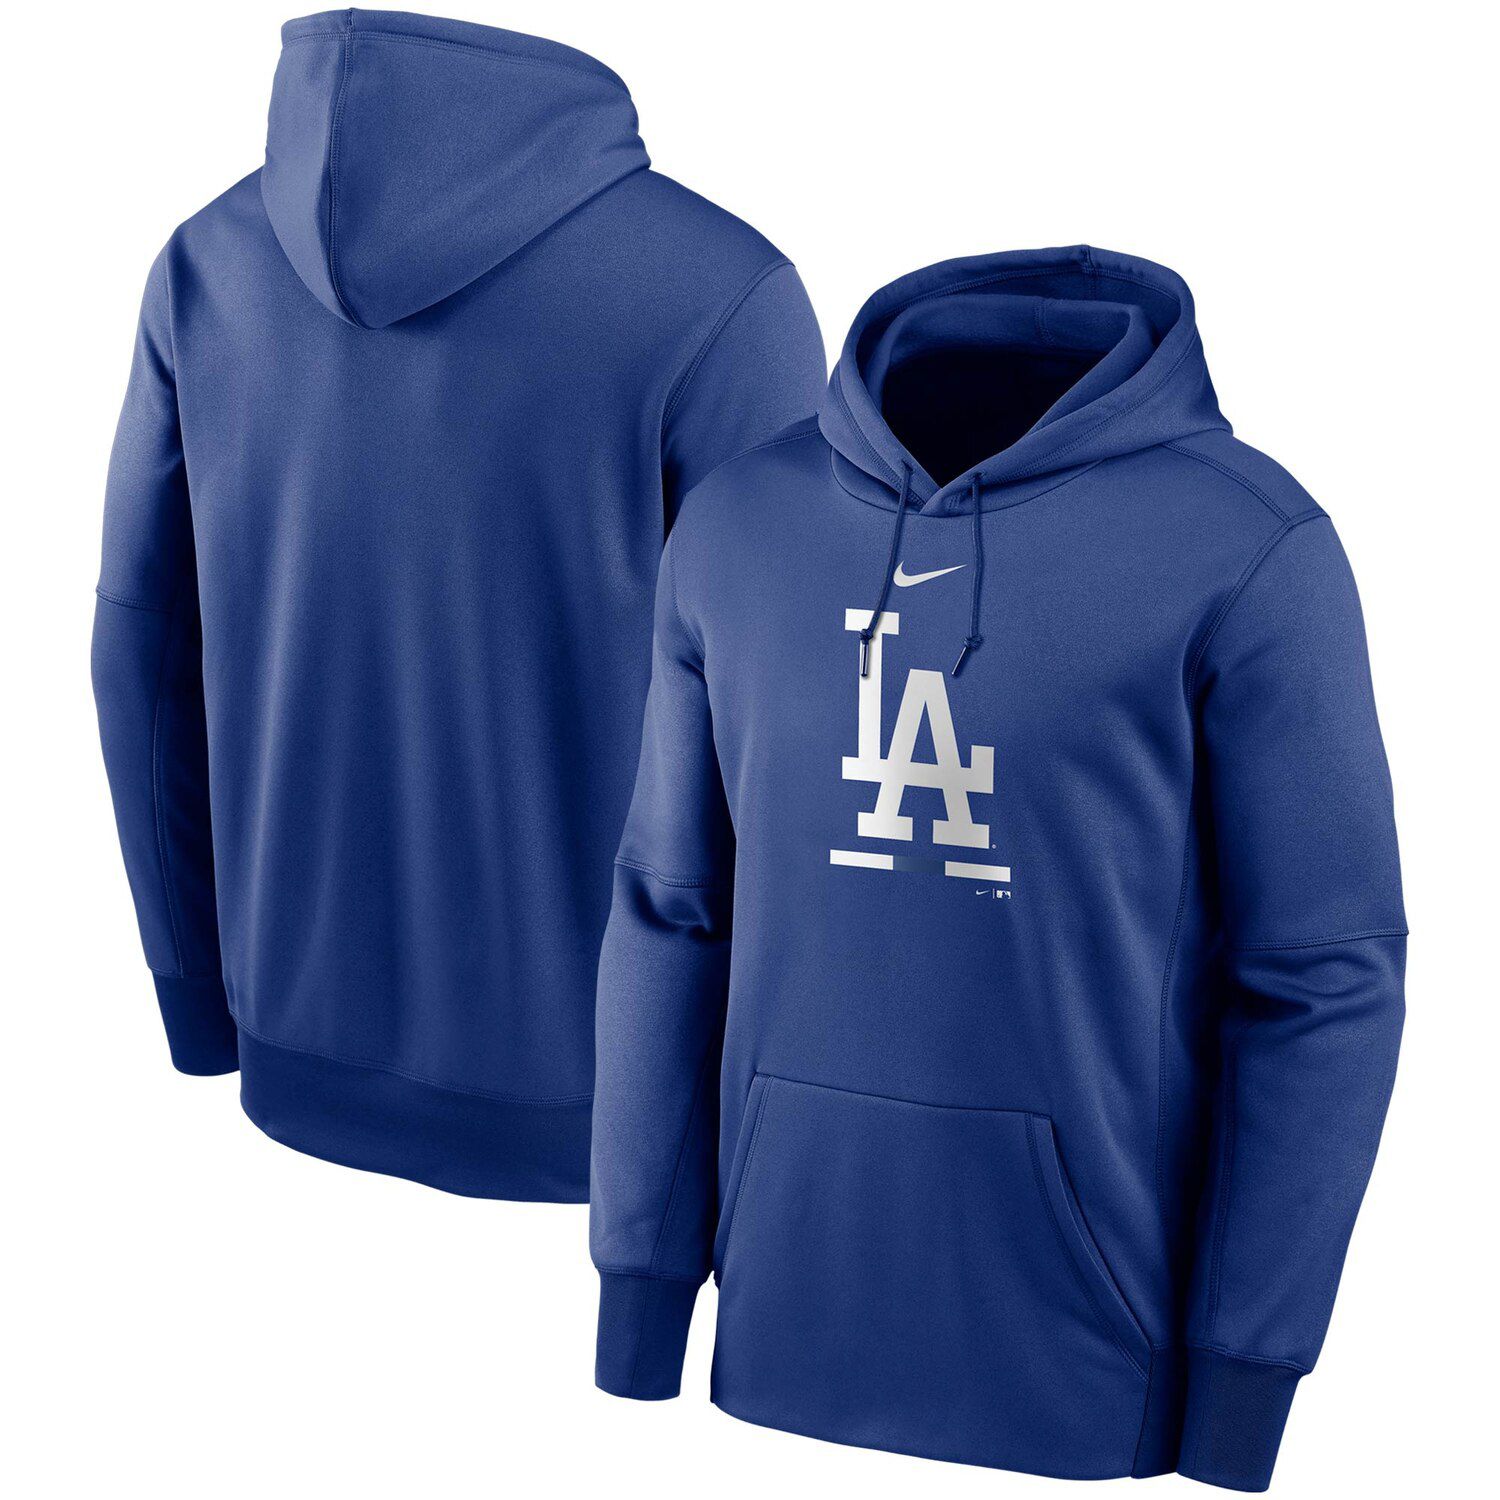 Men's Nike Royal Los Angeles Dodgers 